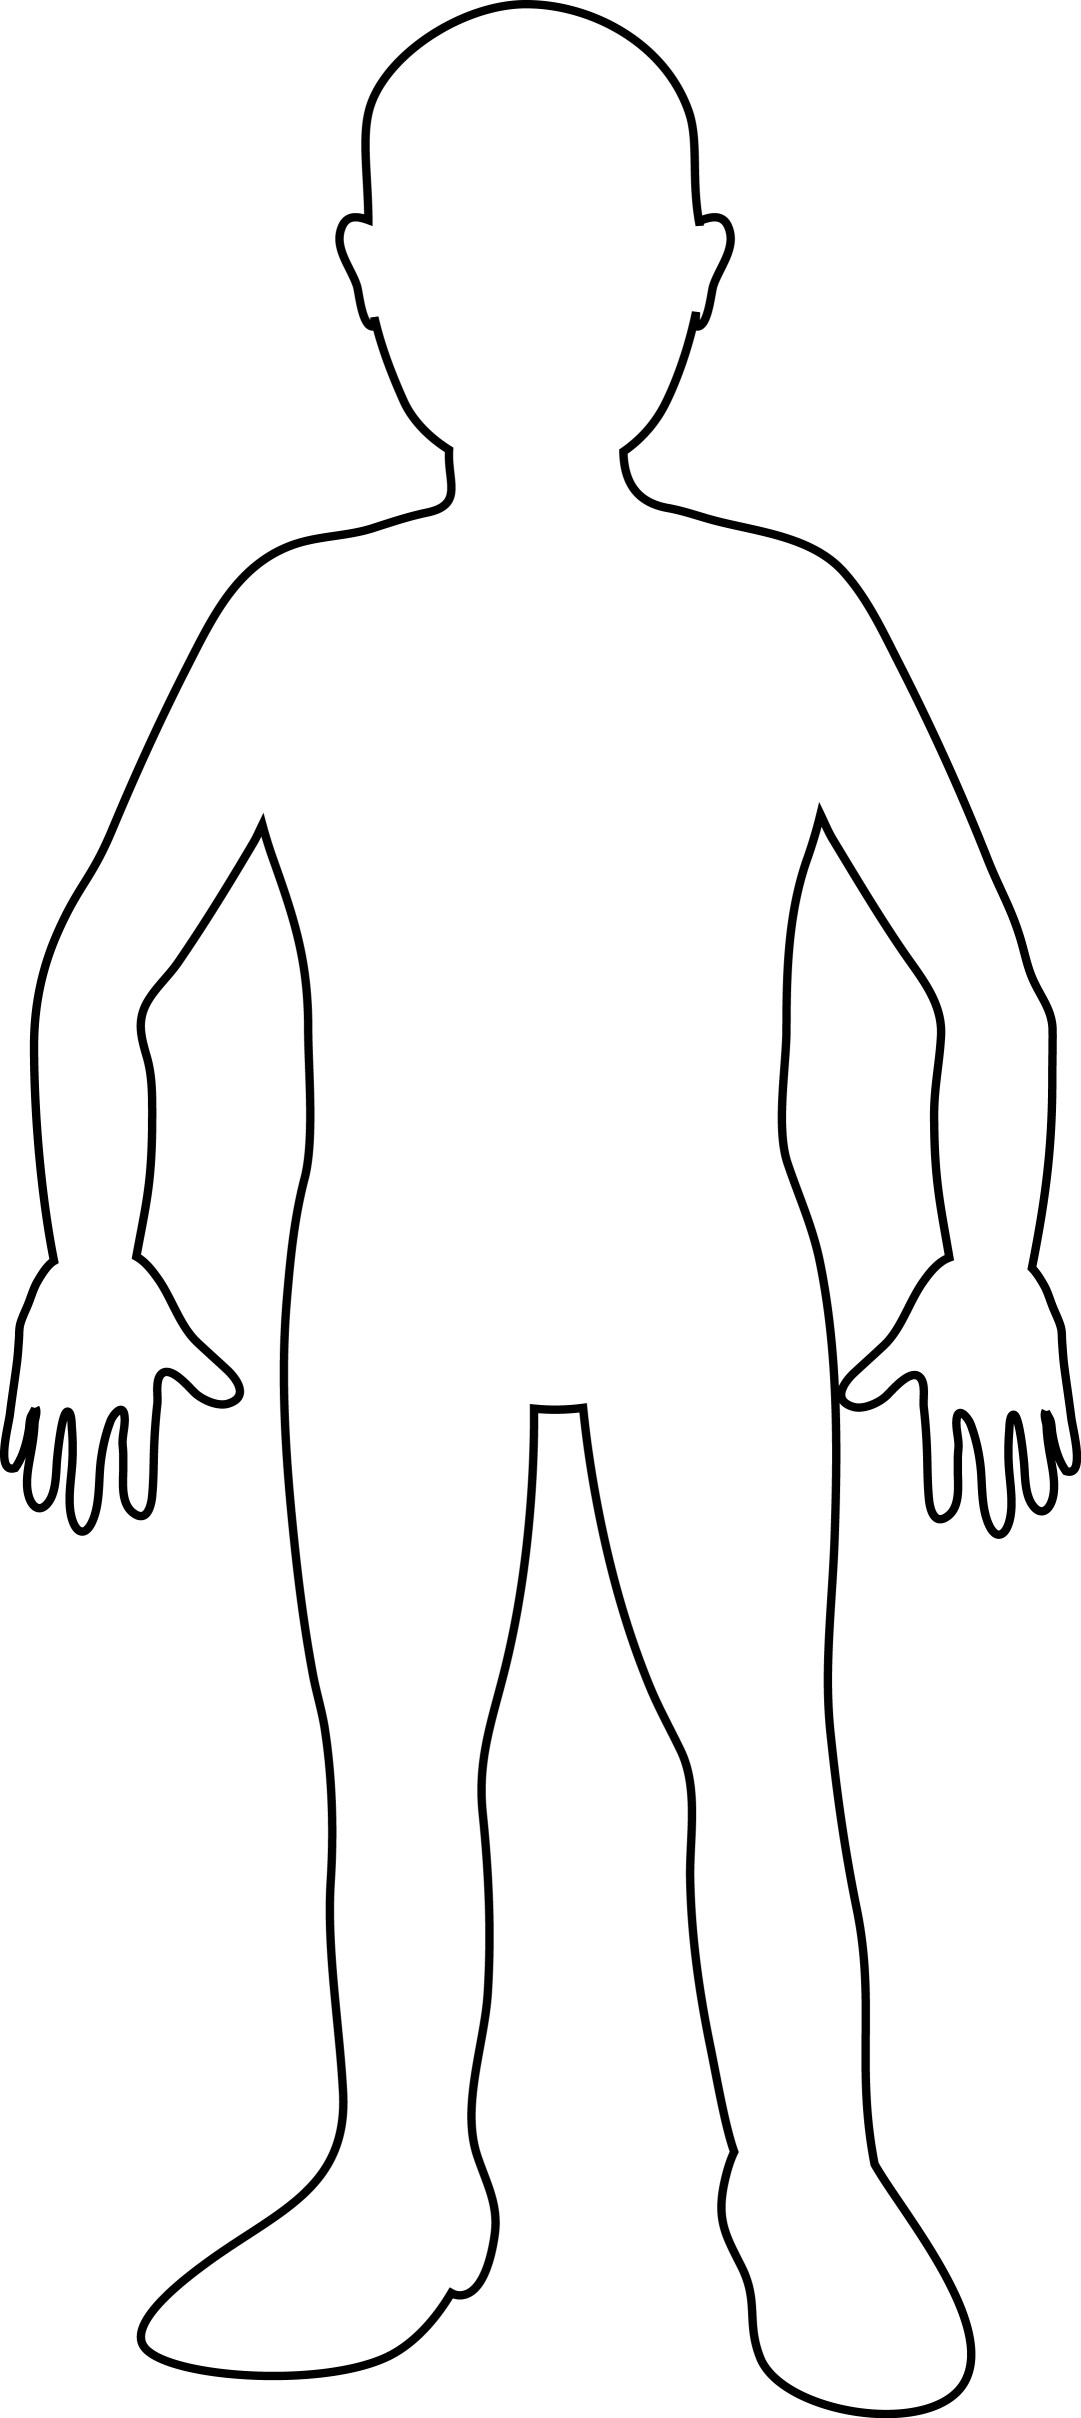 Human Figure Outline Cliparts.co